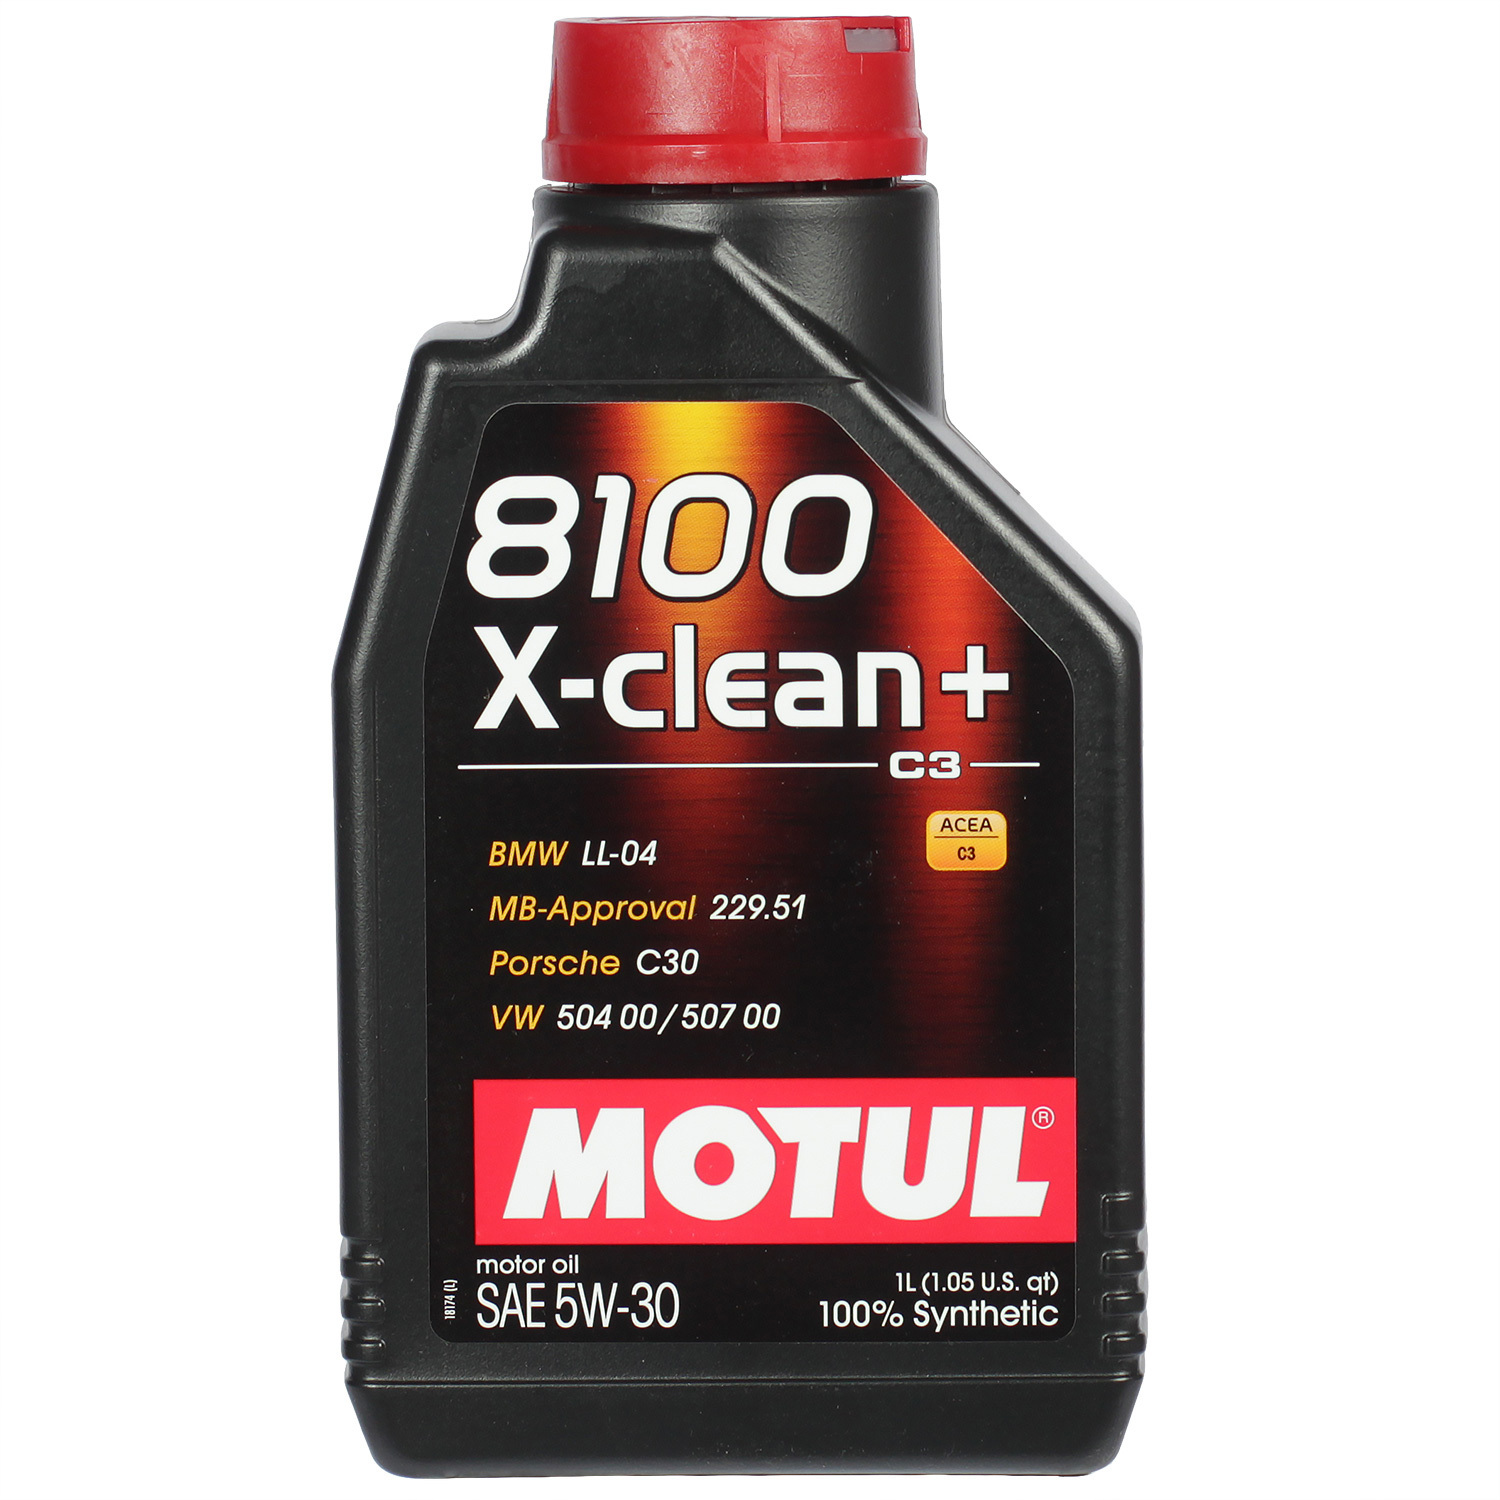 motul моторное масло motul 8100 x clean 5w 30 1 л Motul Моторное масло Motul 8100 X-clean+ 5W-30, 1 л